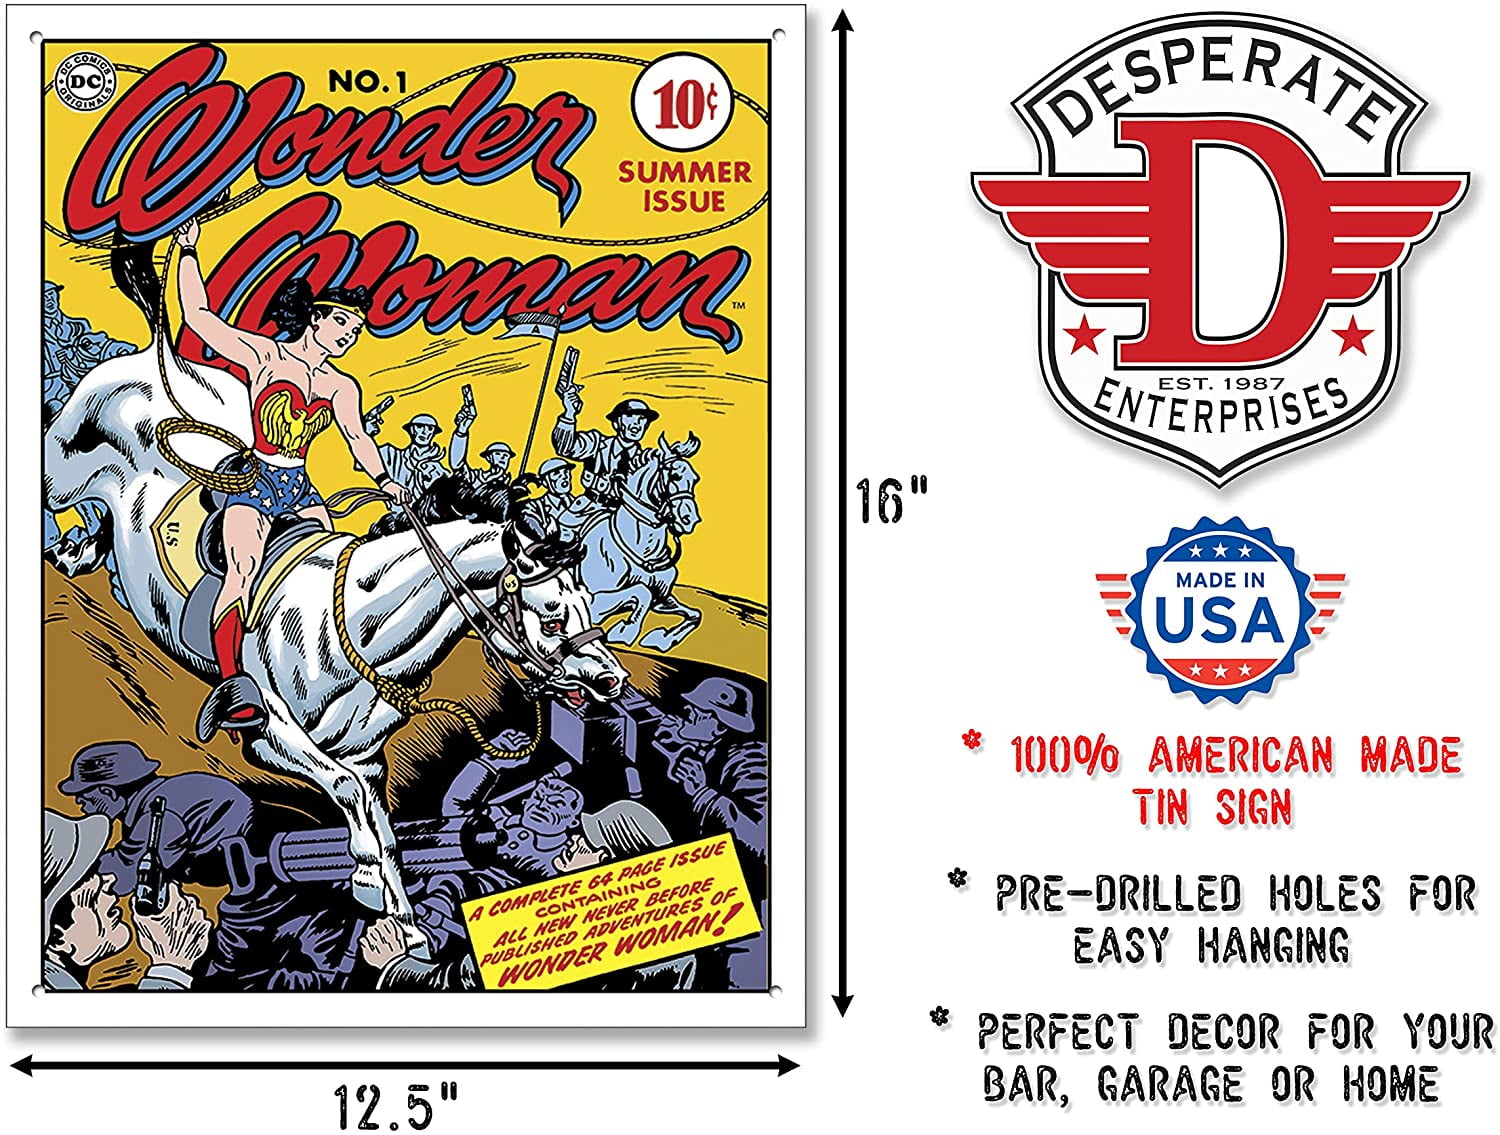 Made in USA Desperate Enterprises Wonder Woman Cover No.1 Tin Sign Nostalgic Vintage Metal Wall Decor 12.5 W x 16 H